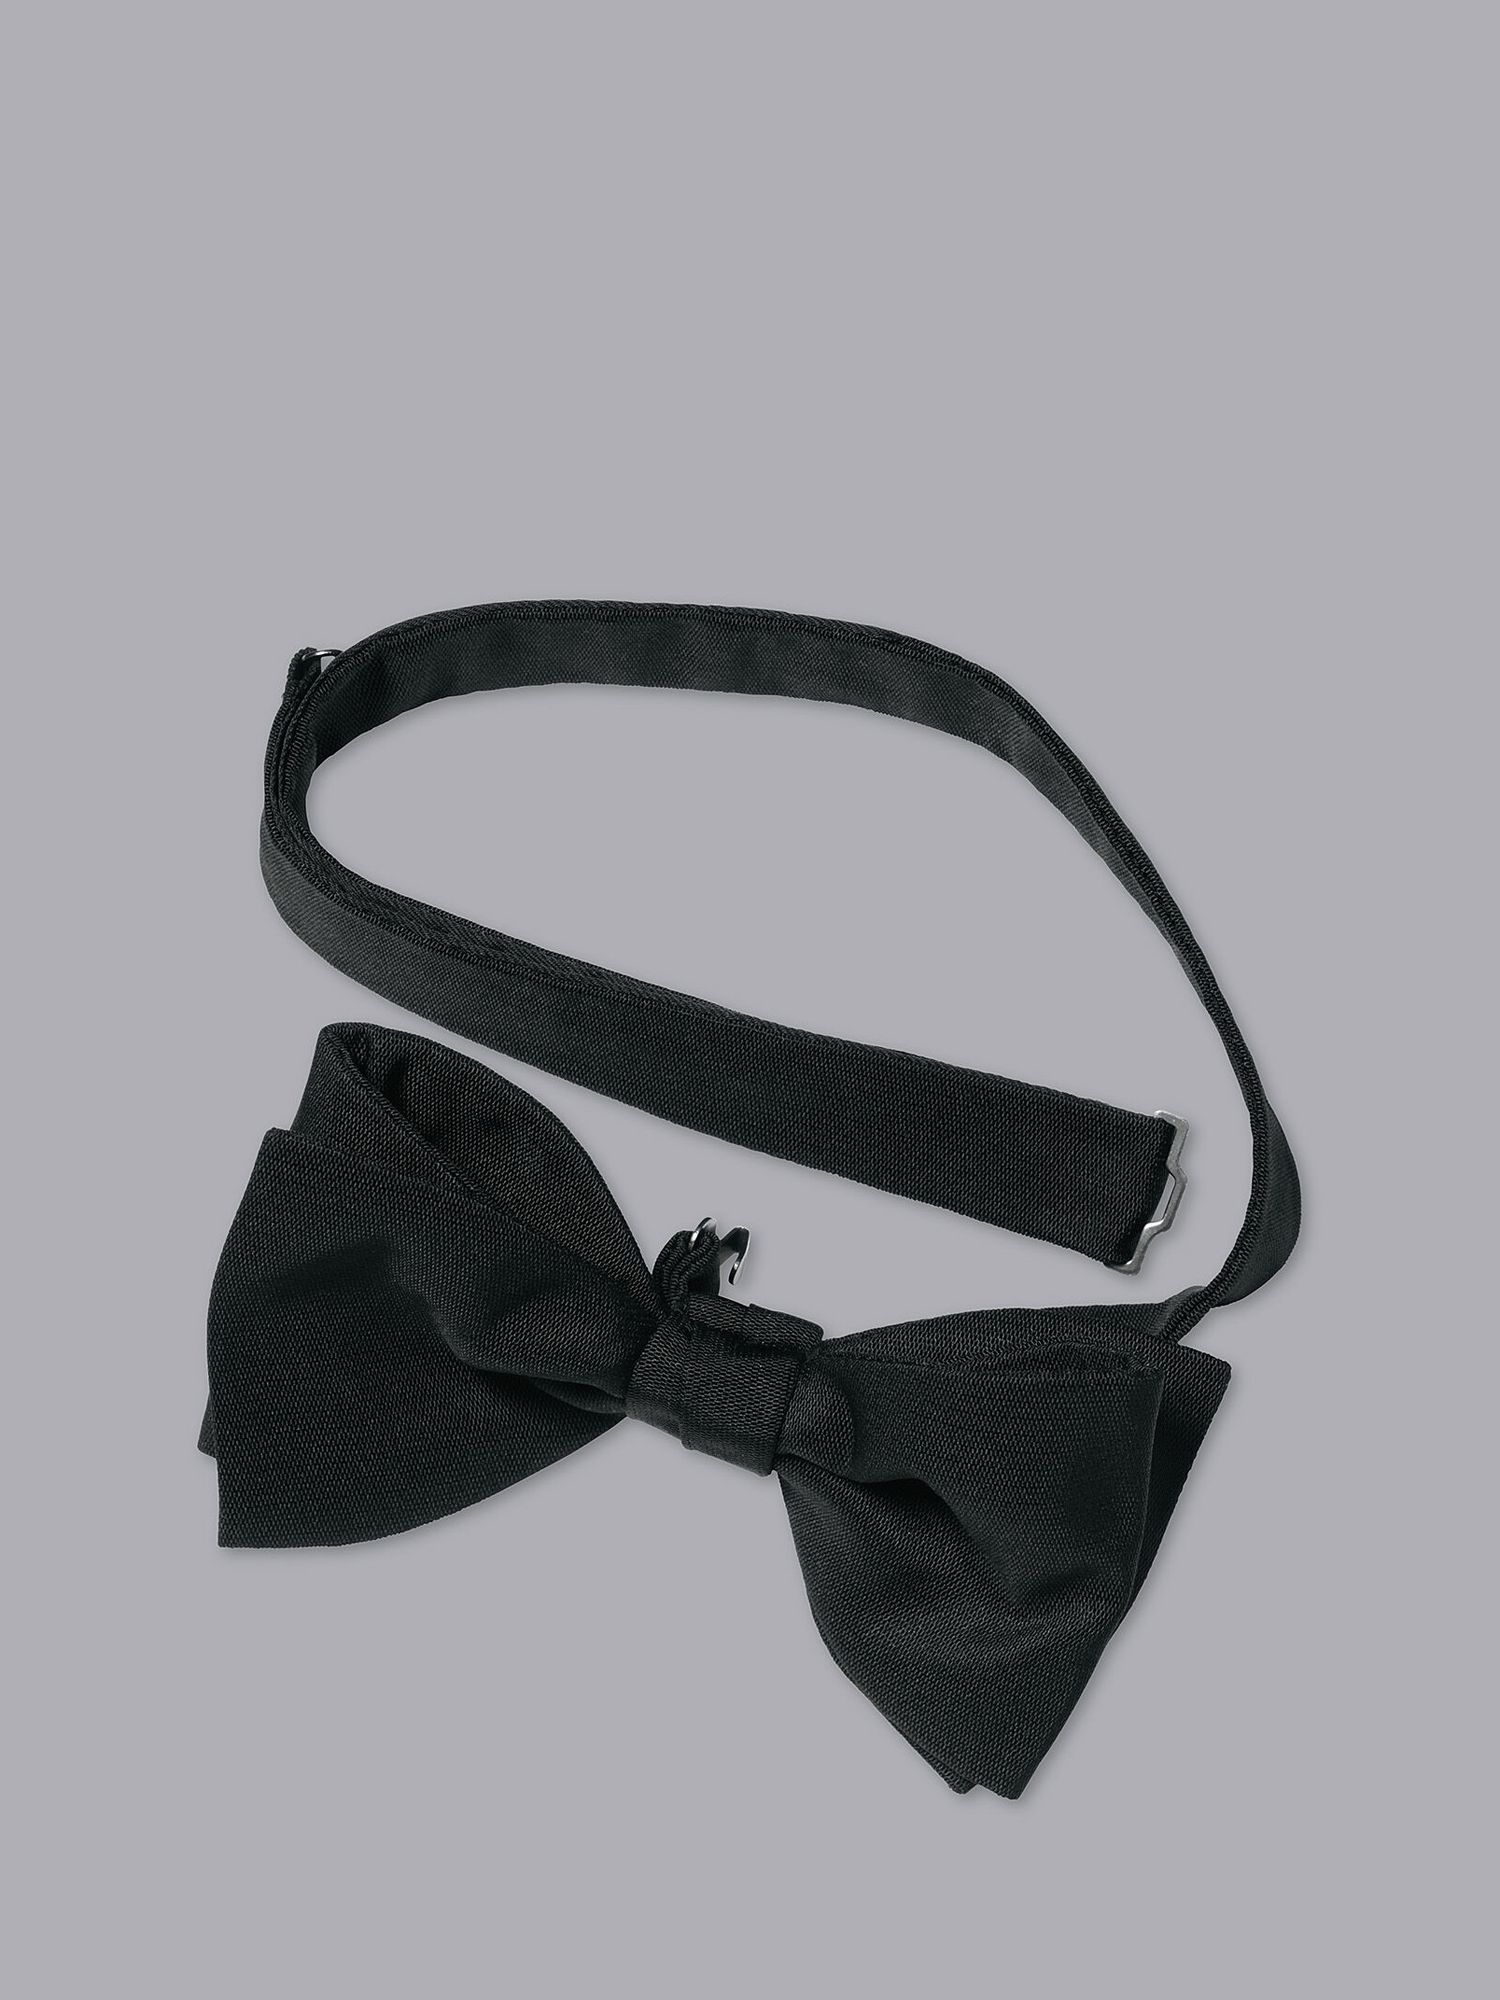 Charles Tyrwhitt Barathea Ready Tied Silk Bow Tie, Black, One Size